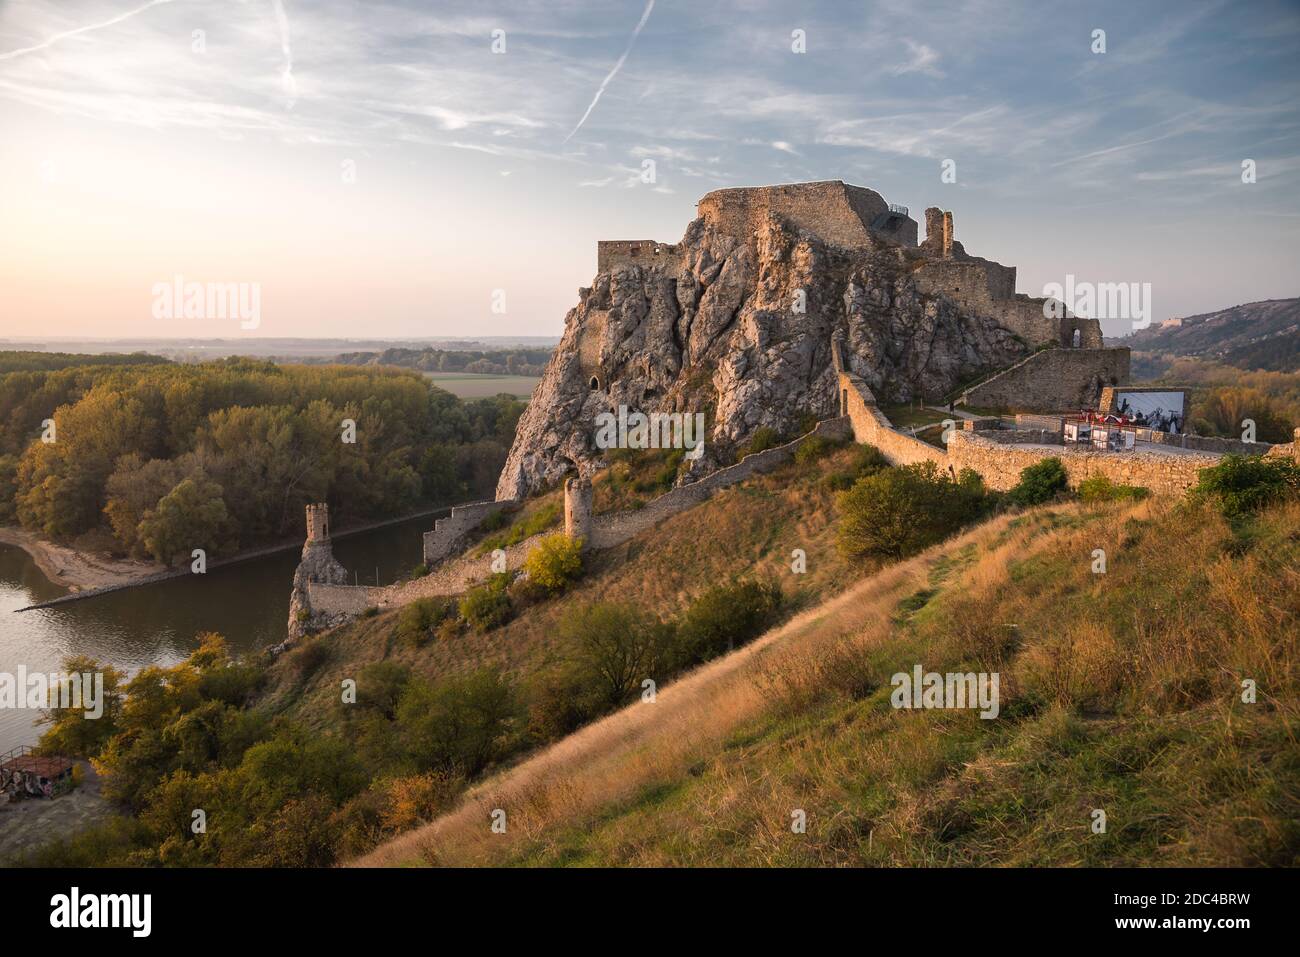 Famous Devin Castle Ruin Located at Confluence of Danube River and Morava River near Bratislava, Slovakia at Sunset Stock Photo